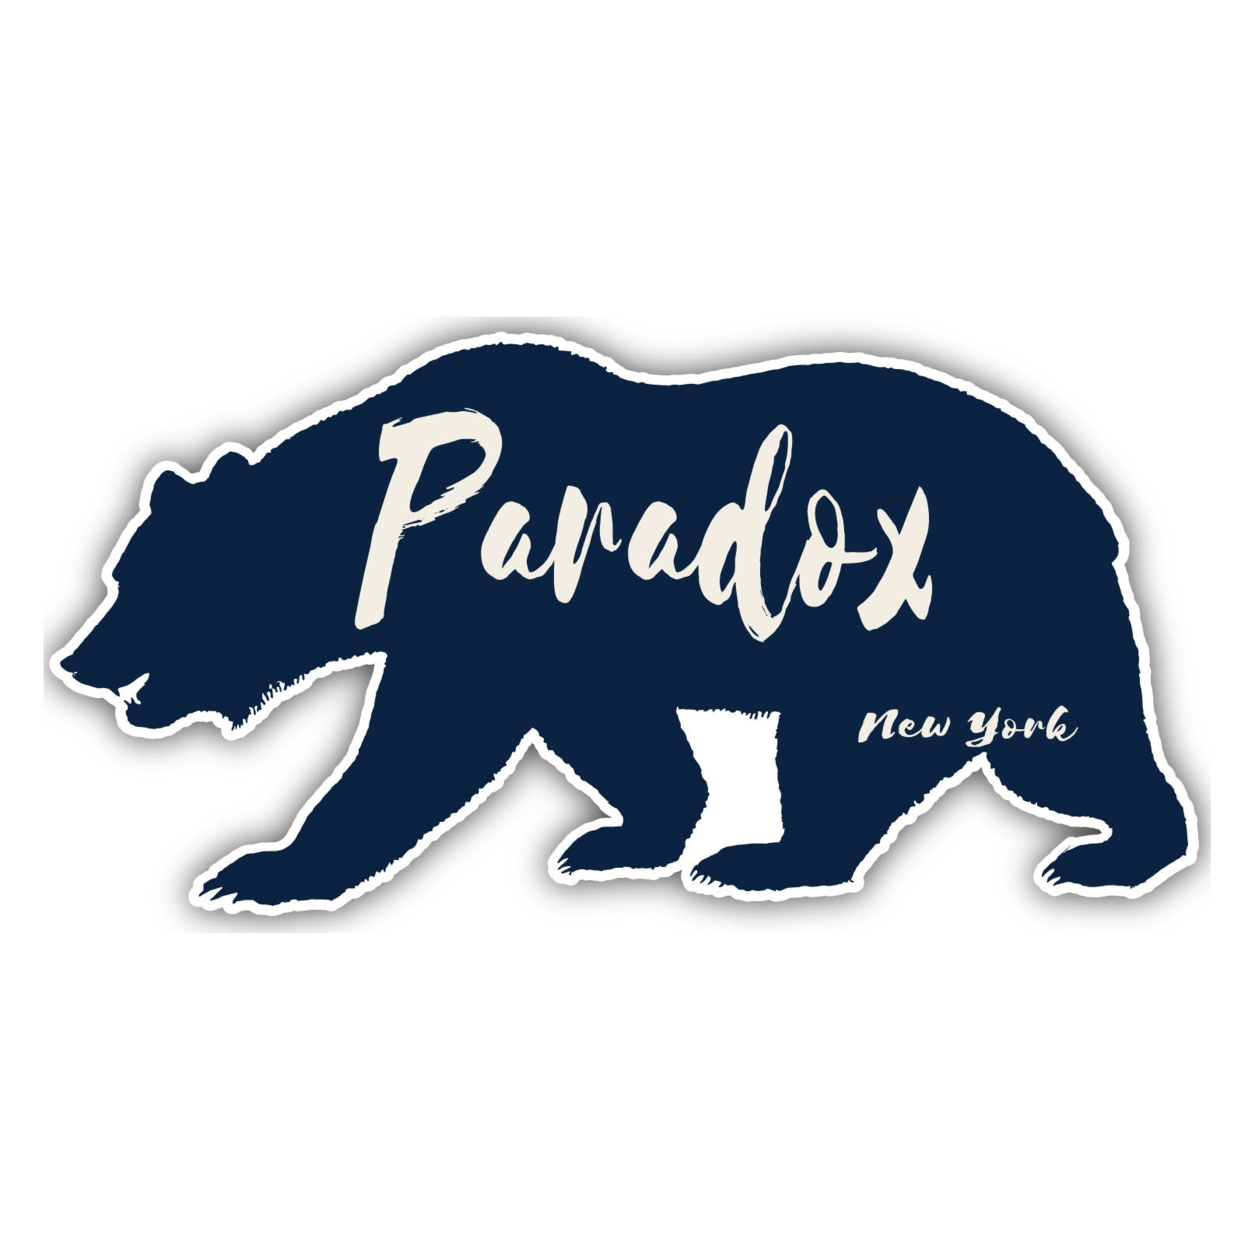 Paradox New York Souvenir Decorative Stickers (Choose Theme And Size) - Single Unit, 4-Inch, Bear